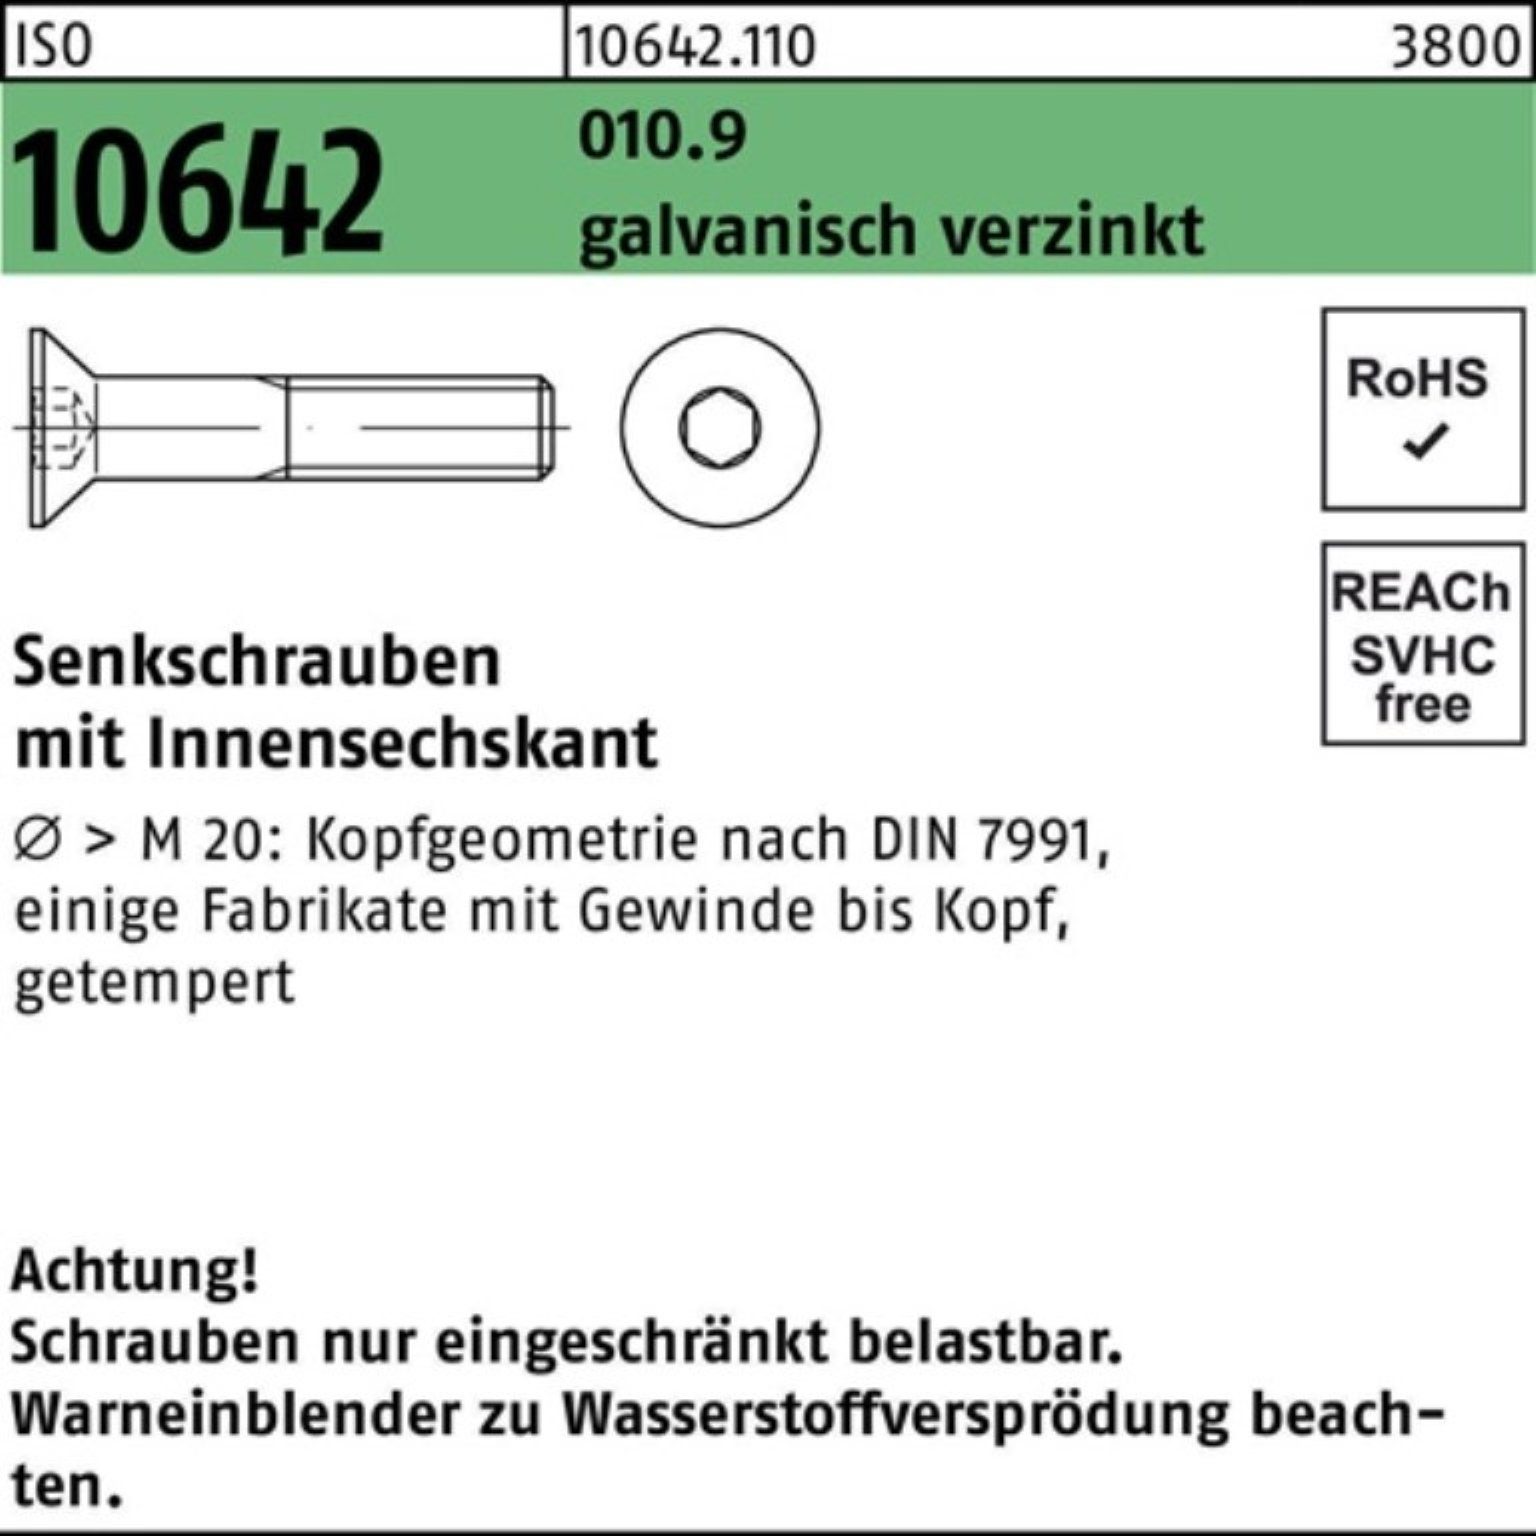 Reyher Senkschraube 500er Pack Senkschraube ISO 10642 Innen-6kt M5x 14 010.9 galv.verz. 50